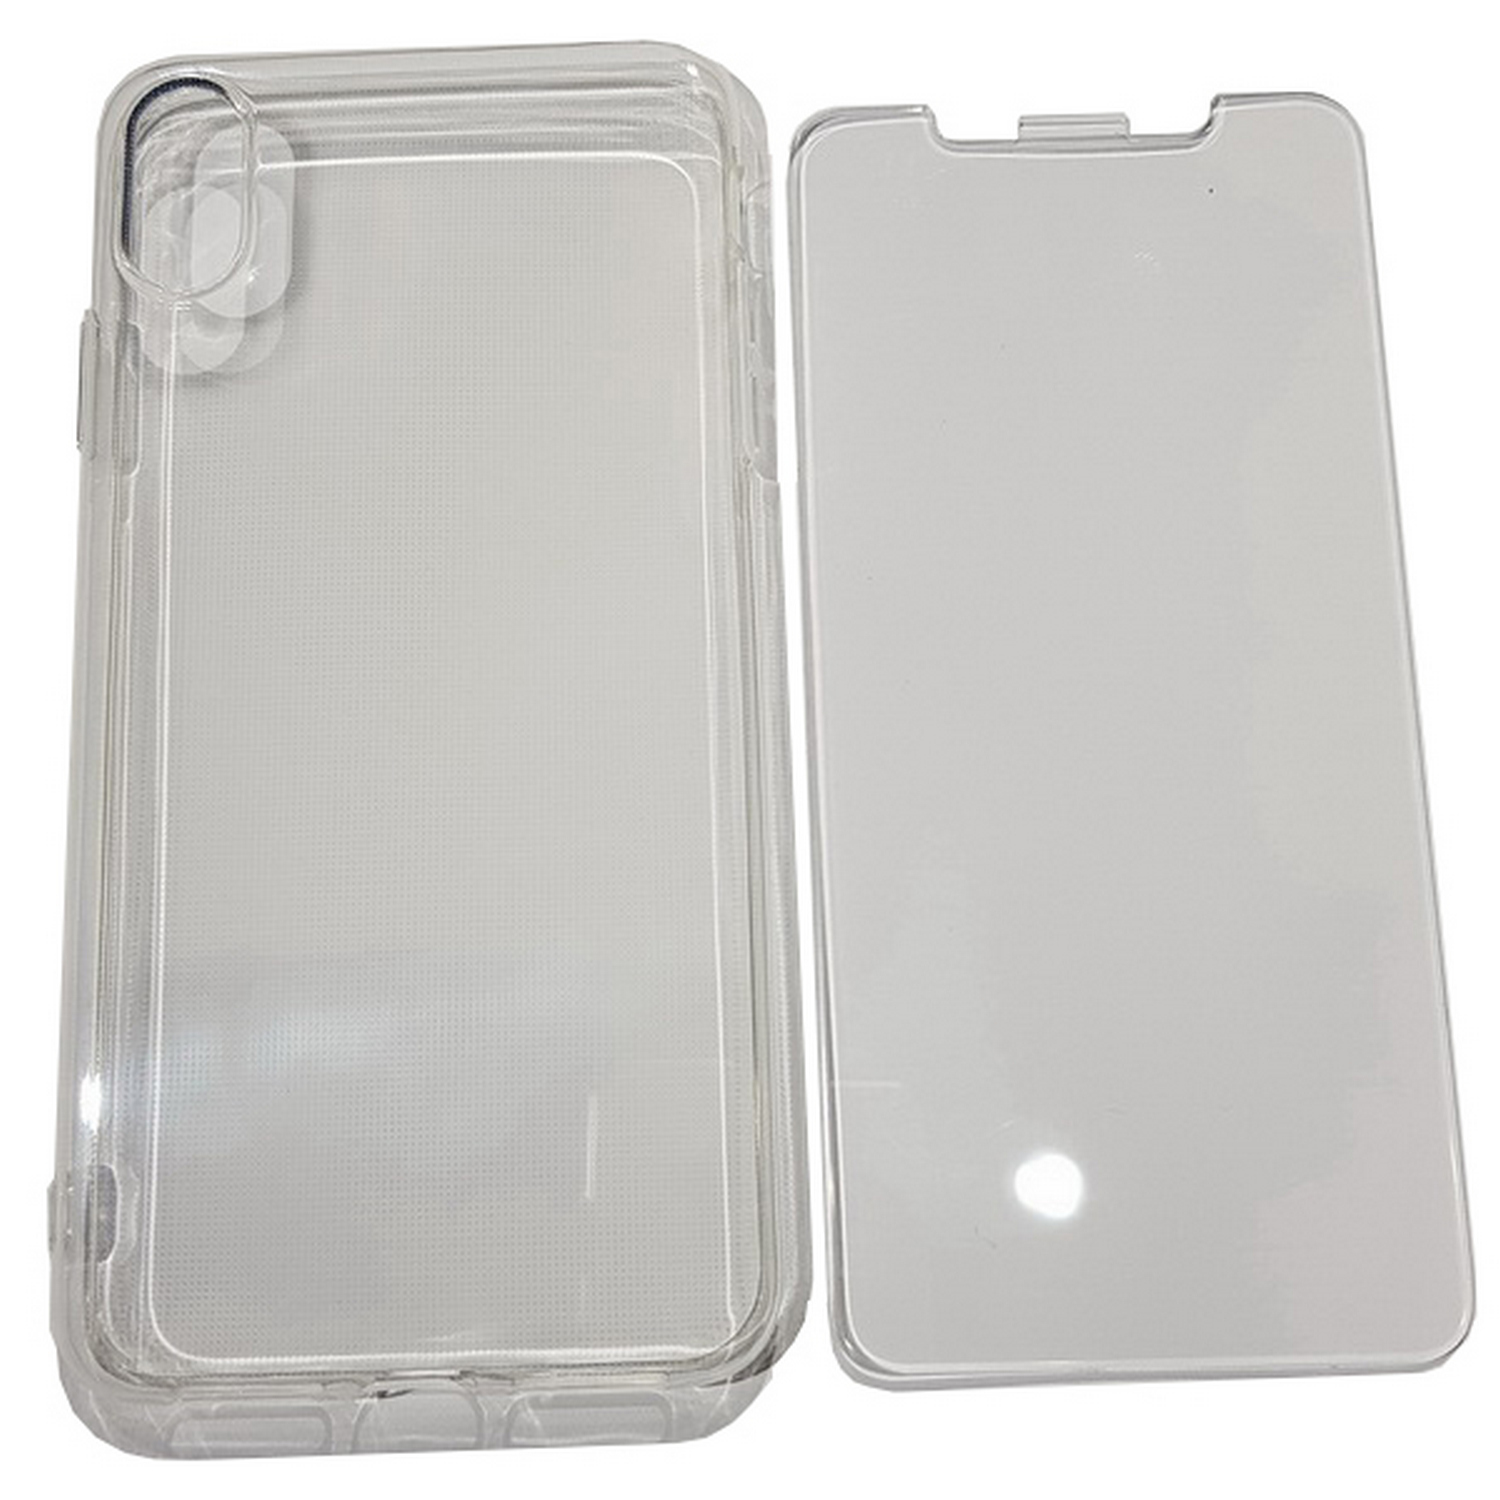 Lumi Case Kit for iPhone CAS-TK100-IPX65-01